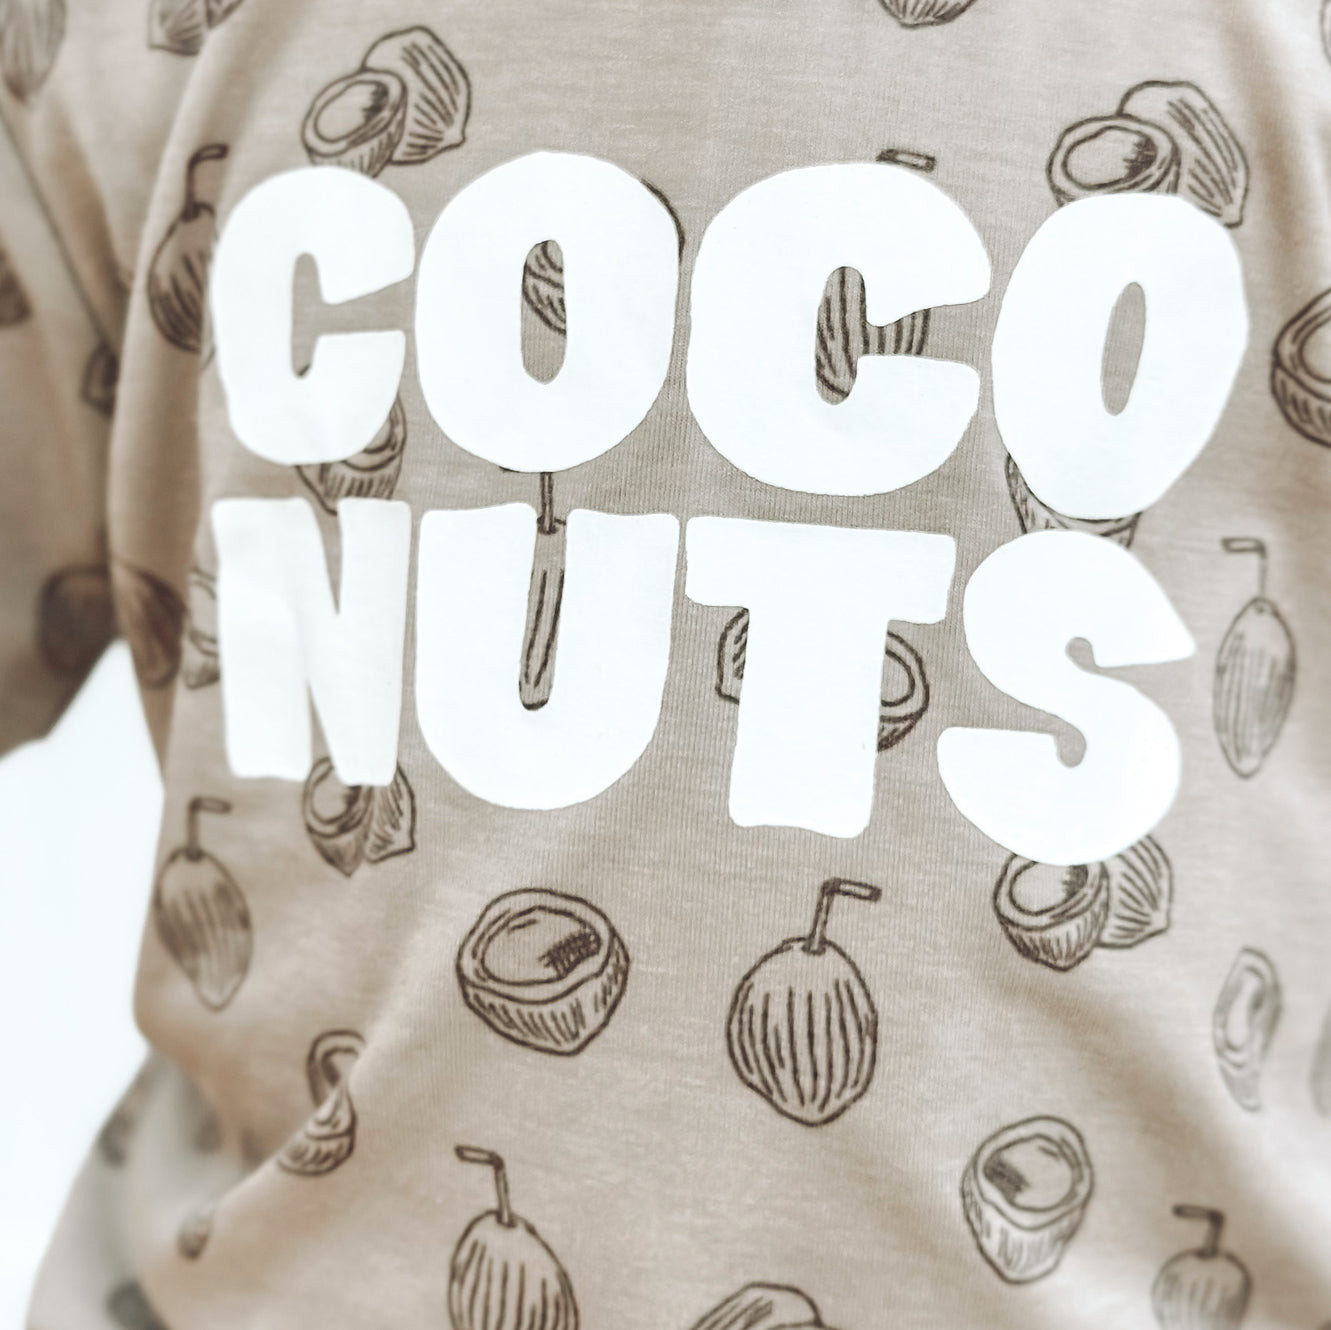 Coconuts Shirt